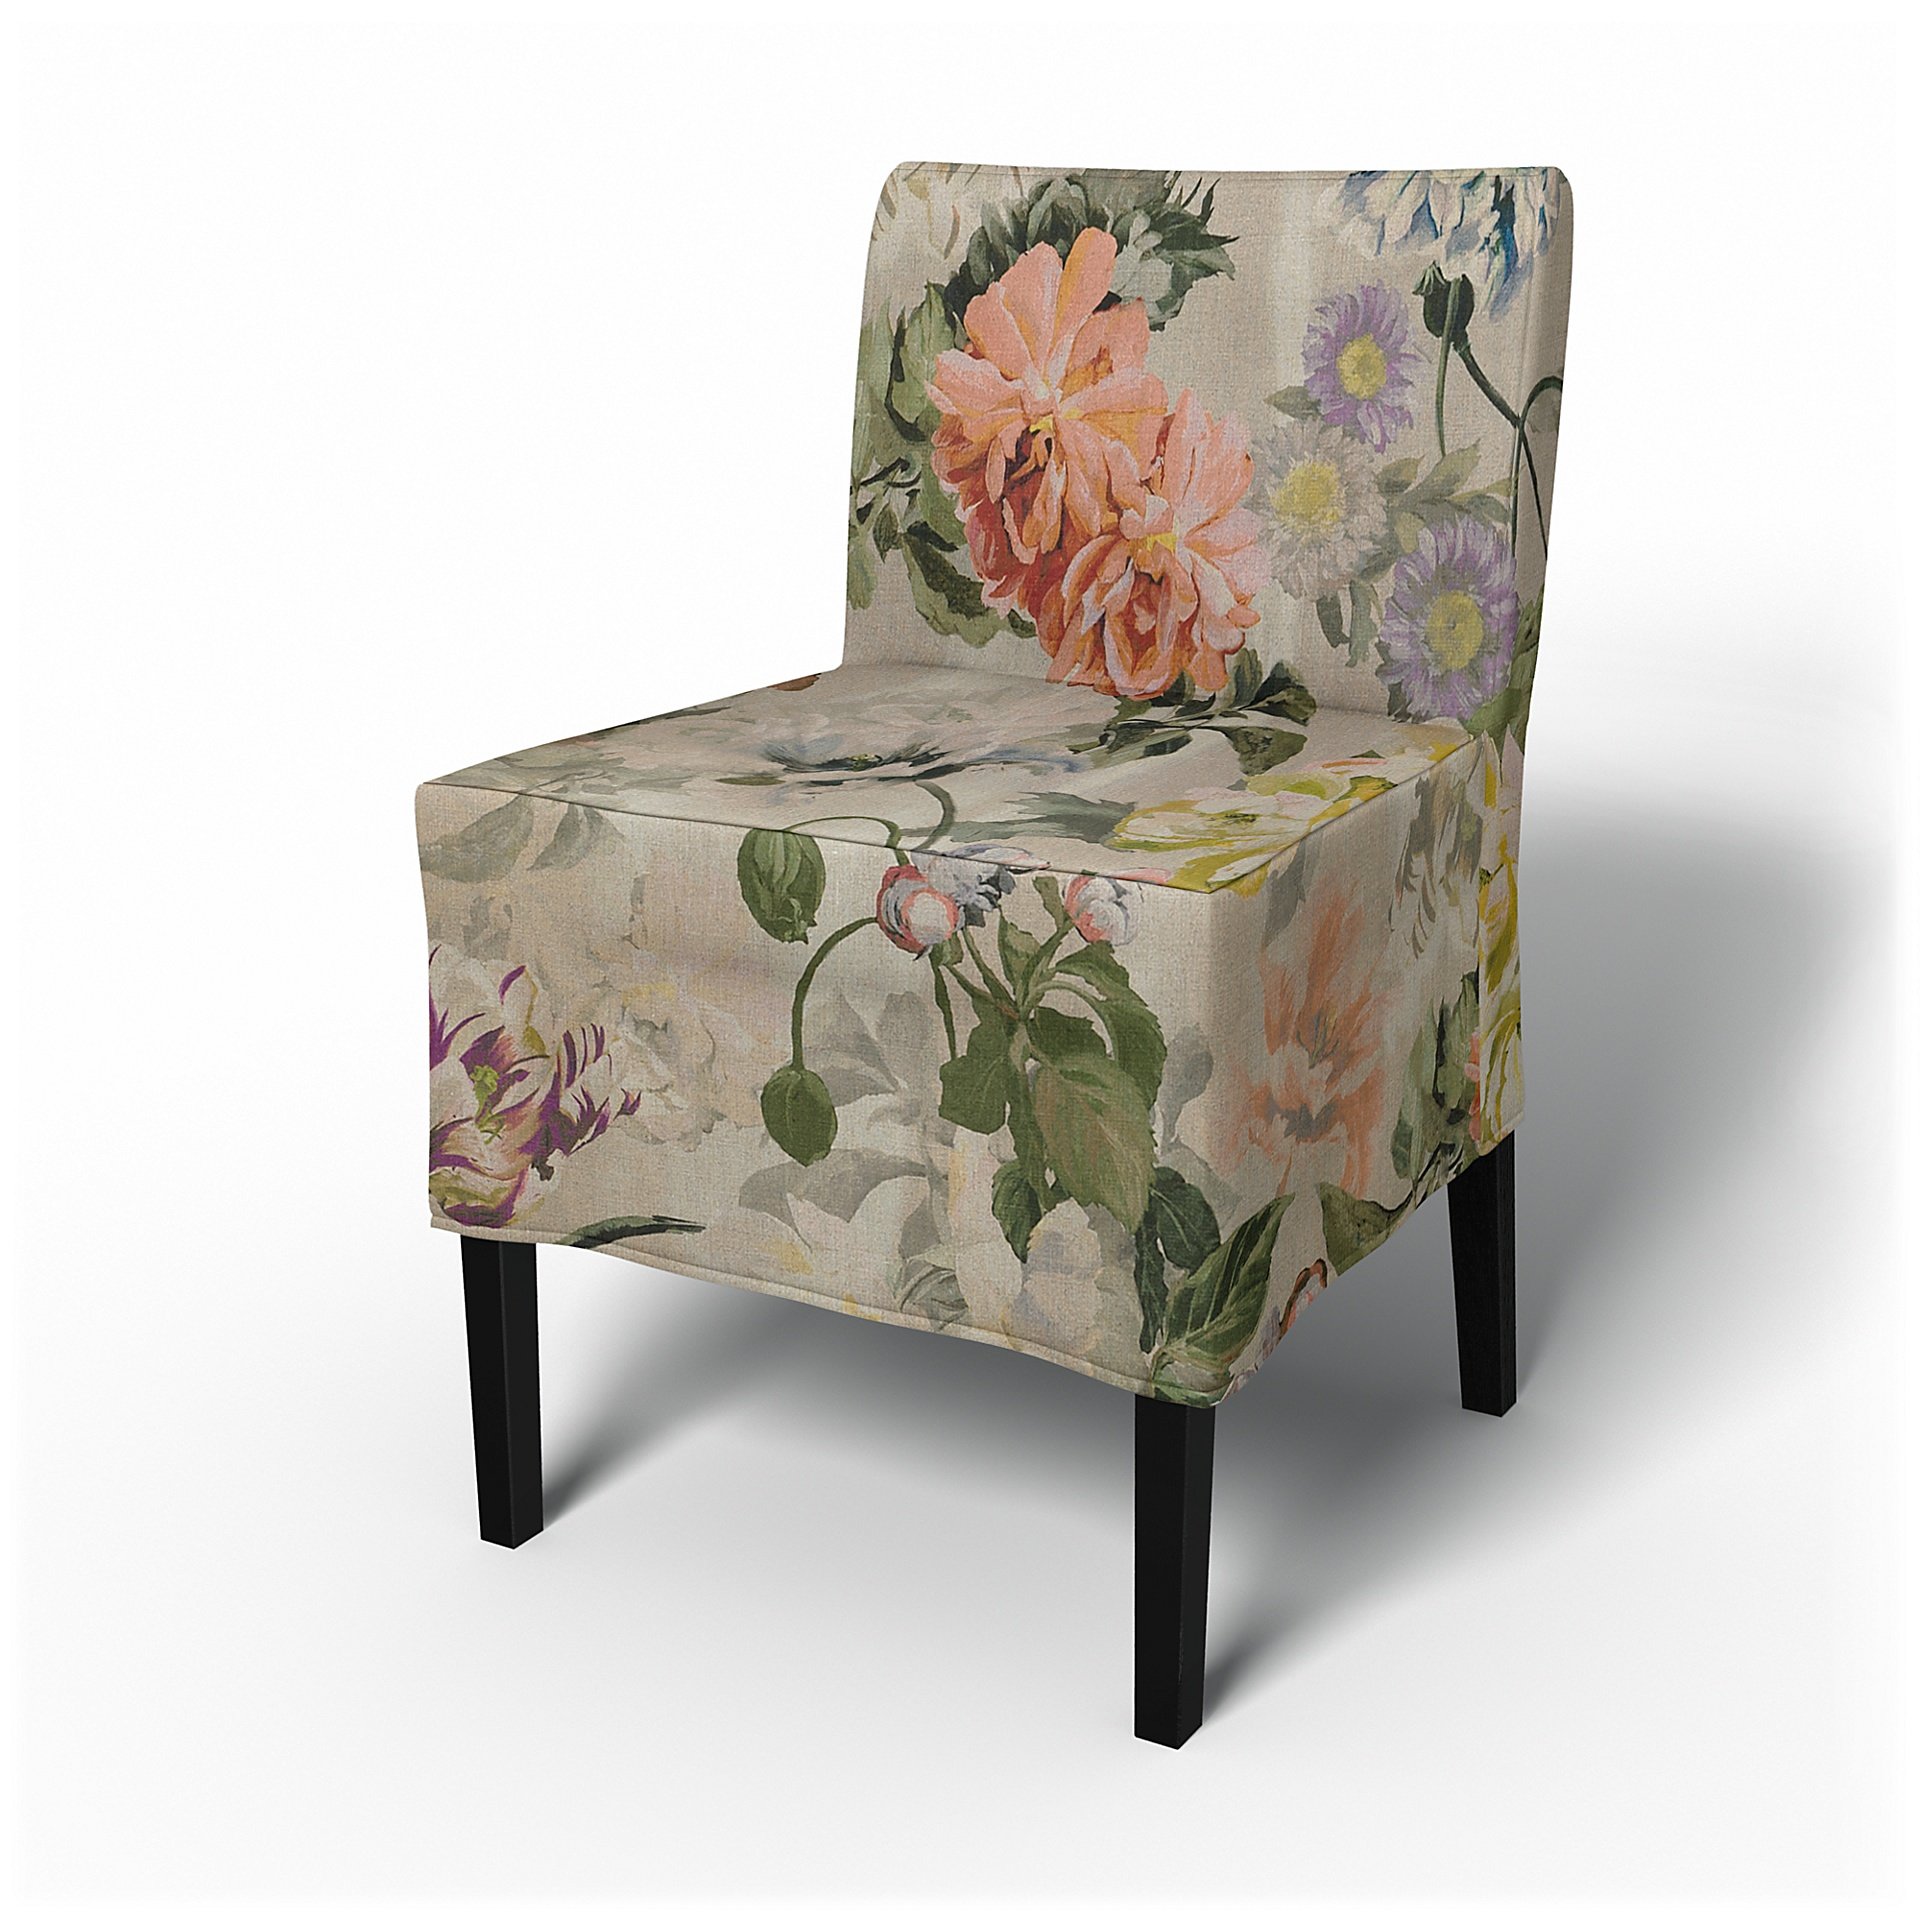 IKEA - Nils Dining Chair Cover, Delft Flower - Tuberose, Linen - Bemz